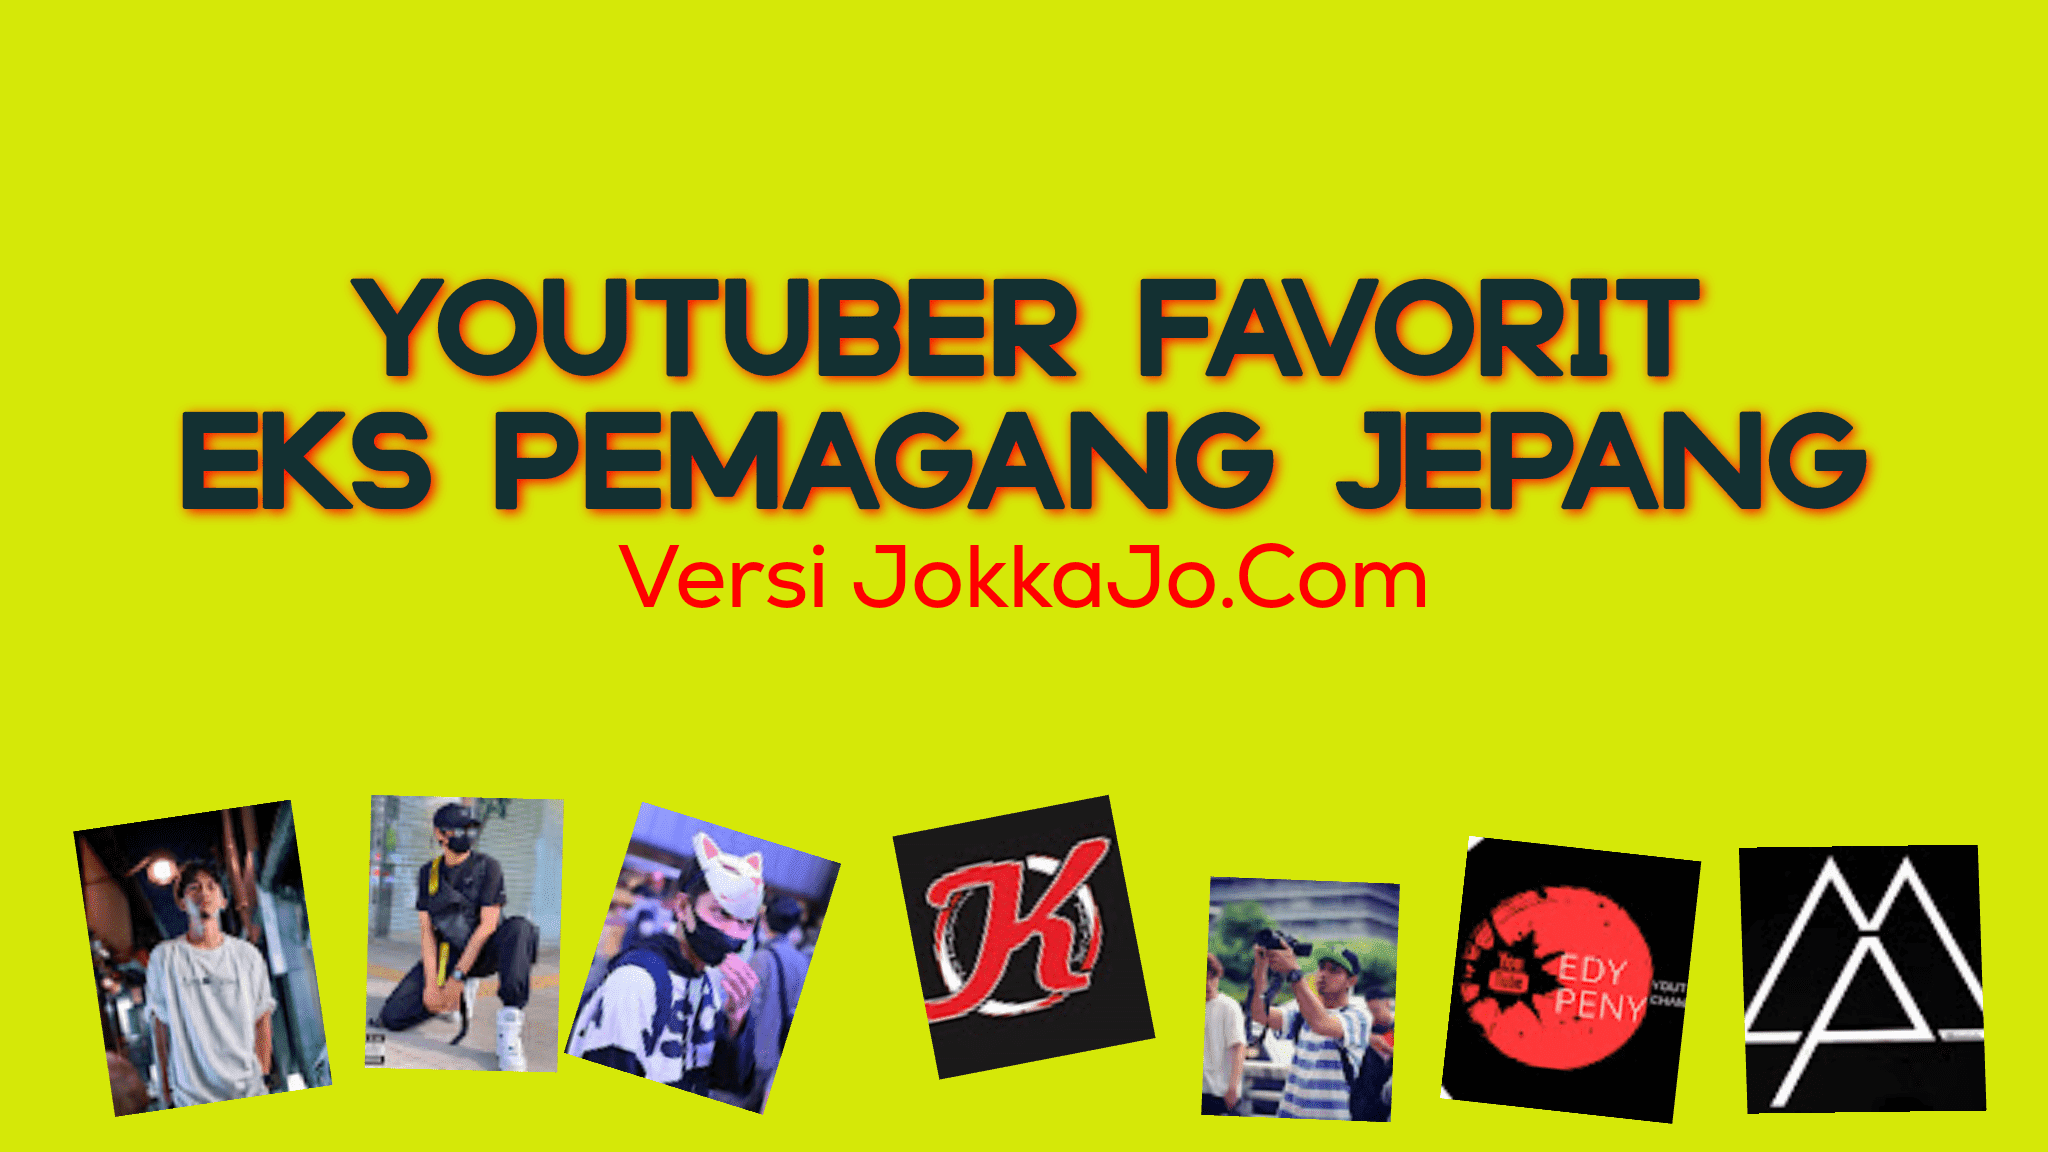 Youtuber jepang asal indonesia